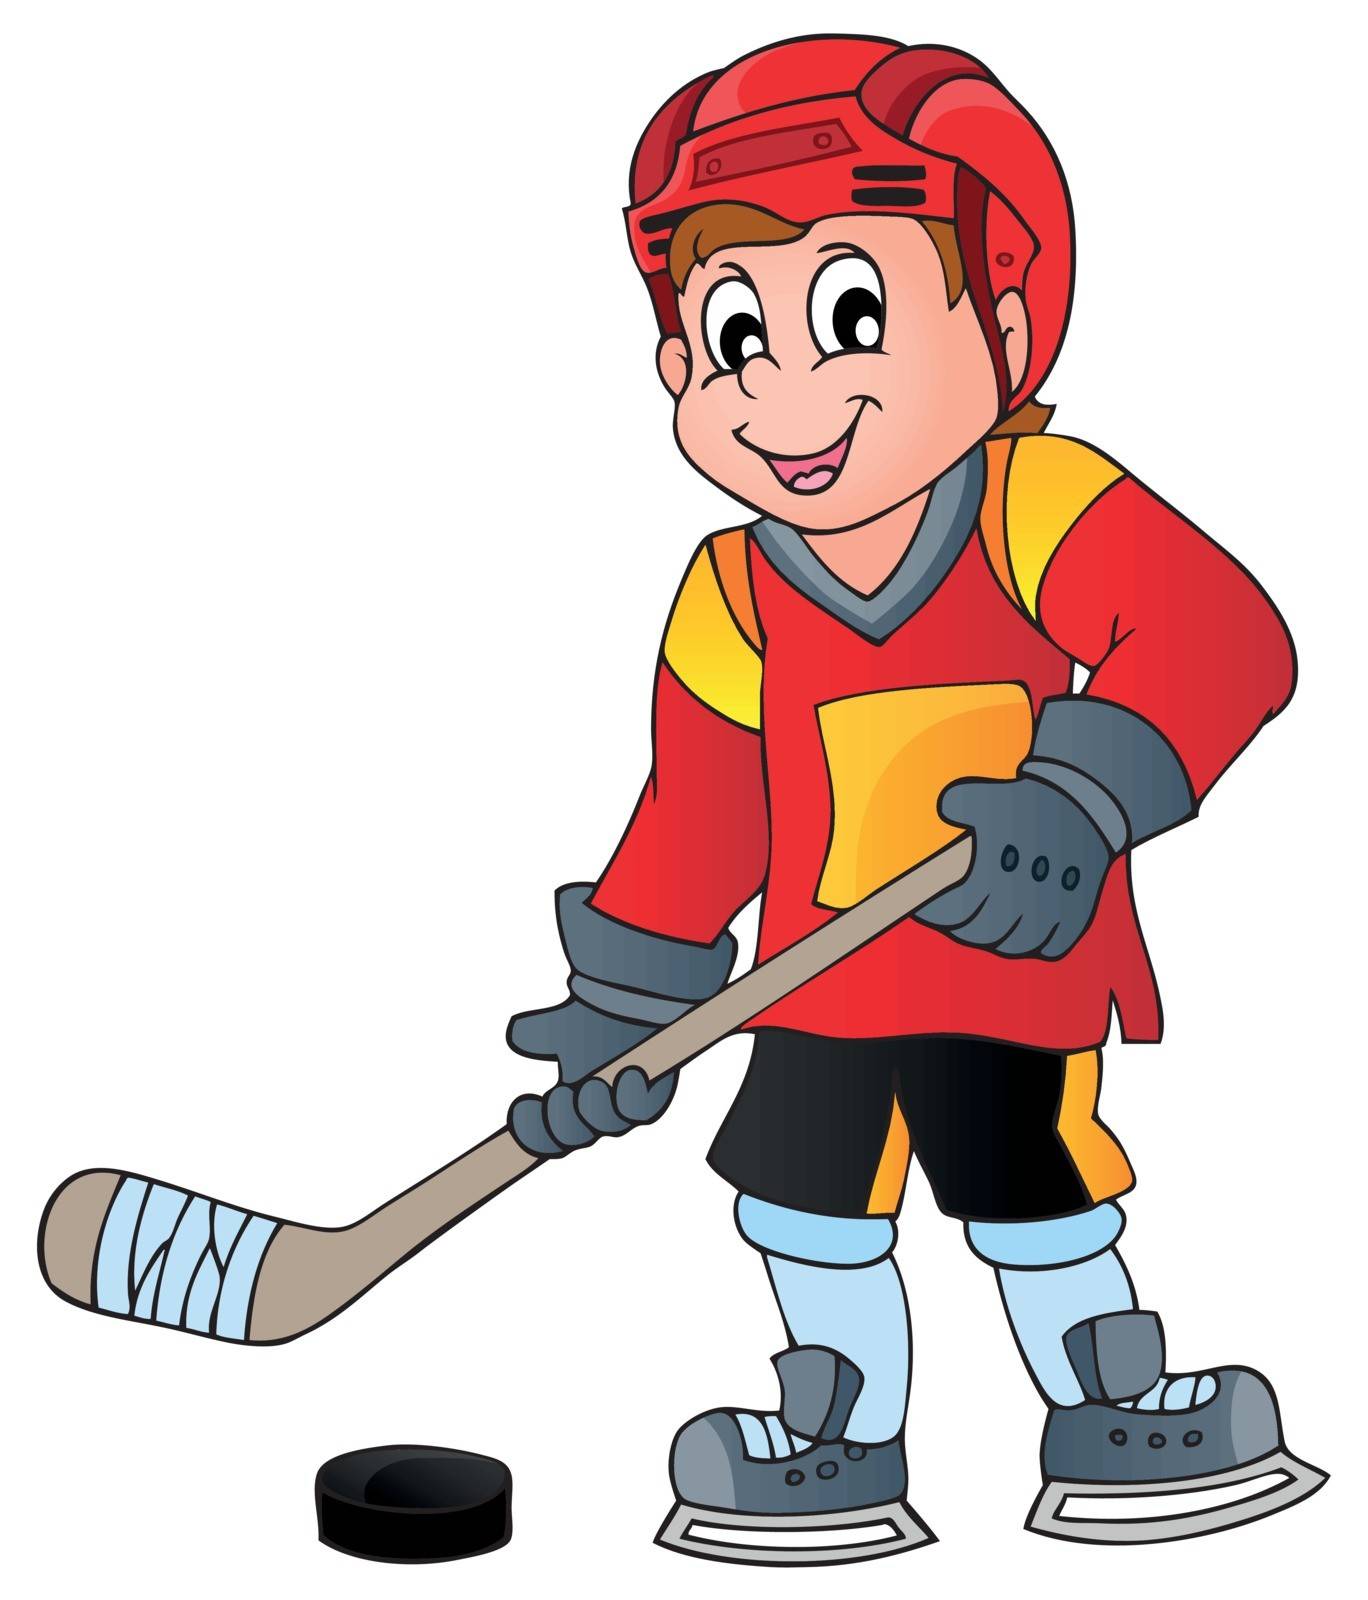 Hockey theme image 1 - eps10 vector illustration.